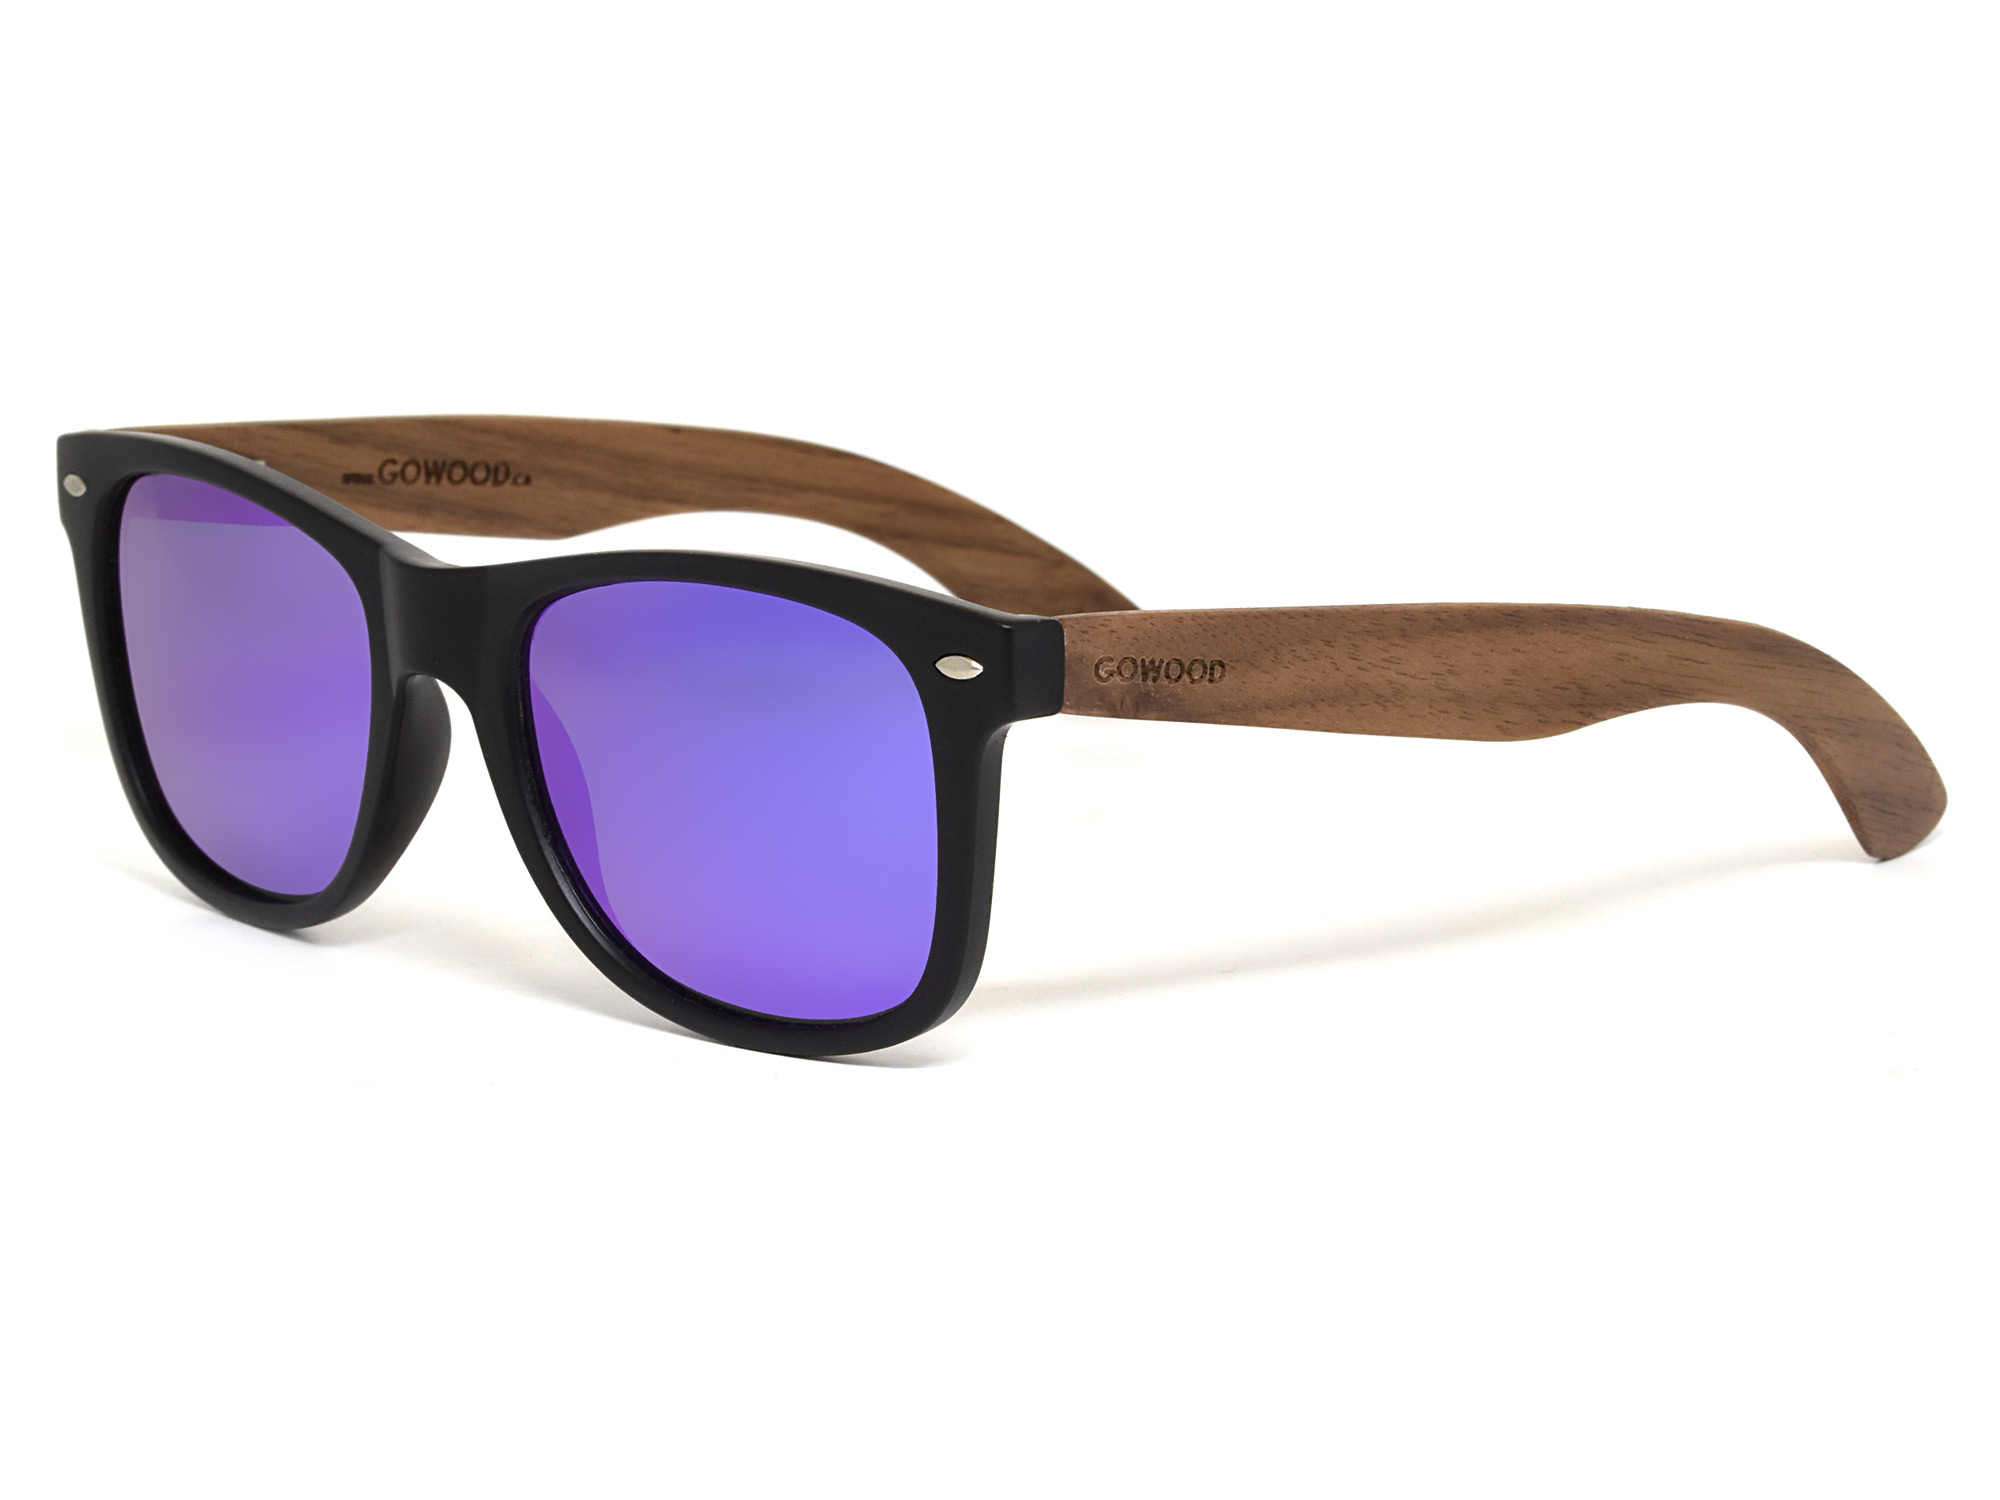 Walnut wood sunglasses blue mirrored lenses - angle